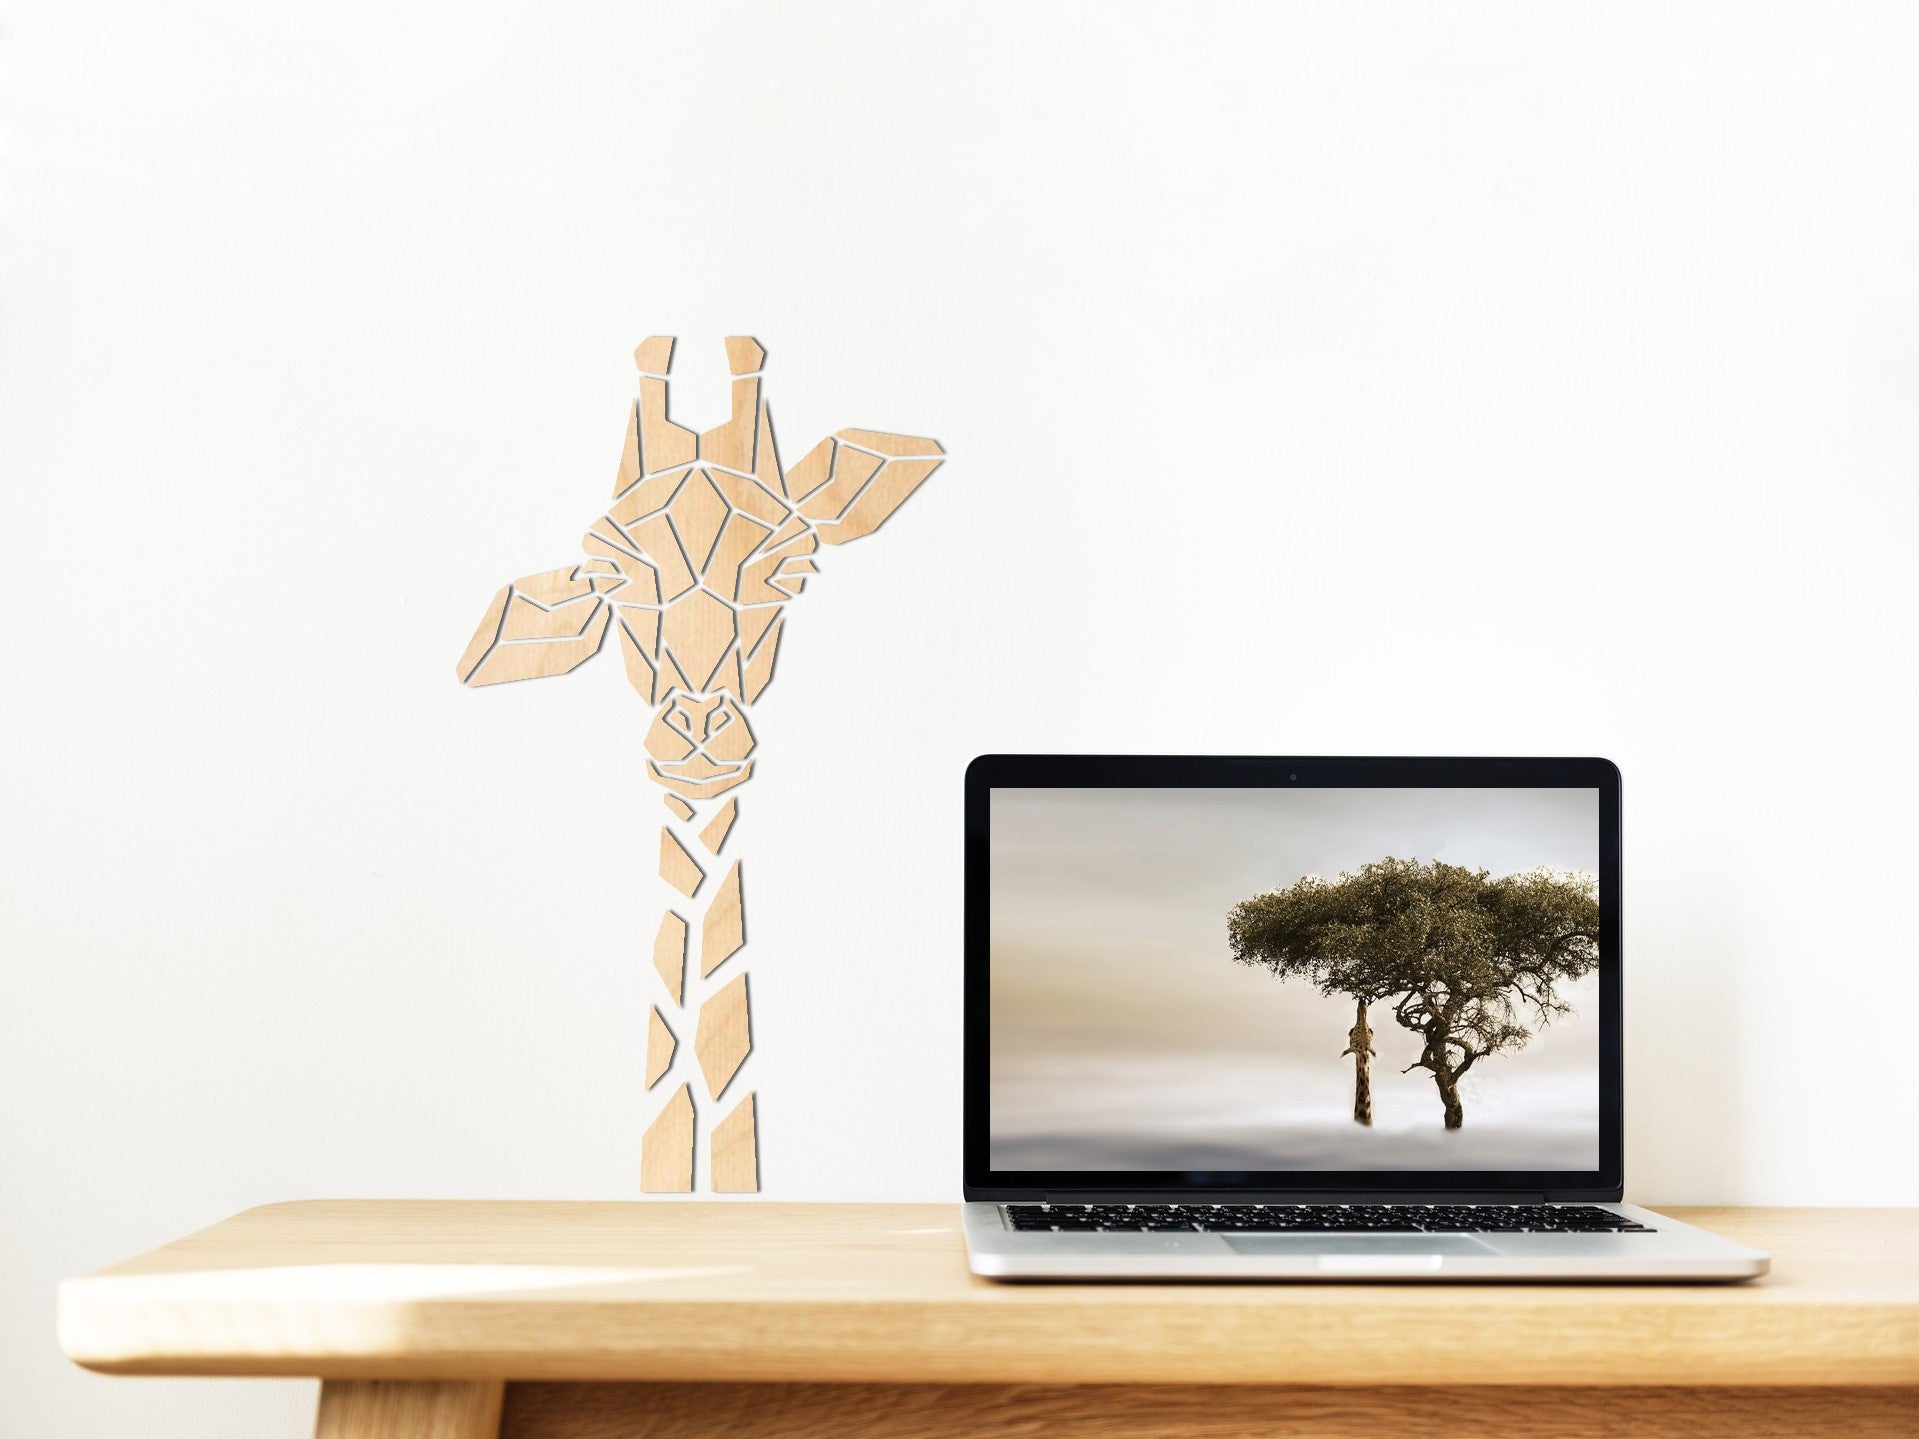 Houten wanddecoratie - Giraffe 3 mm dik berkenhout houtkleur